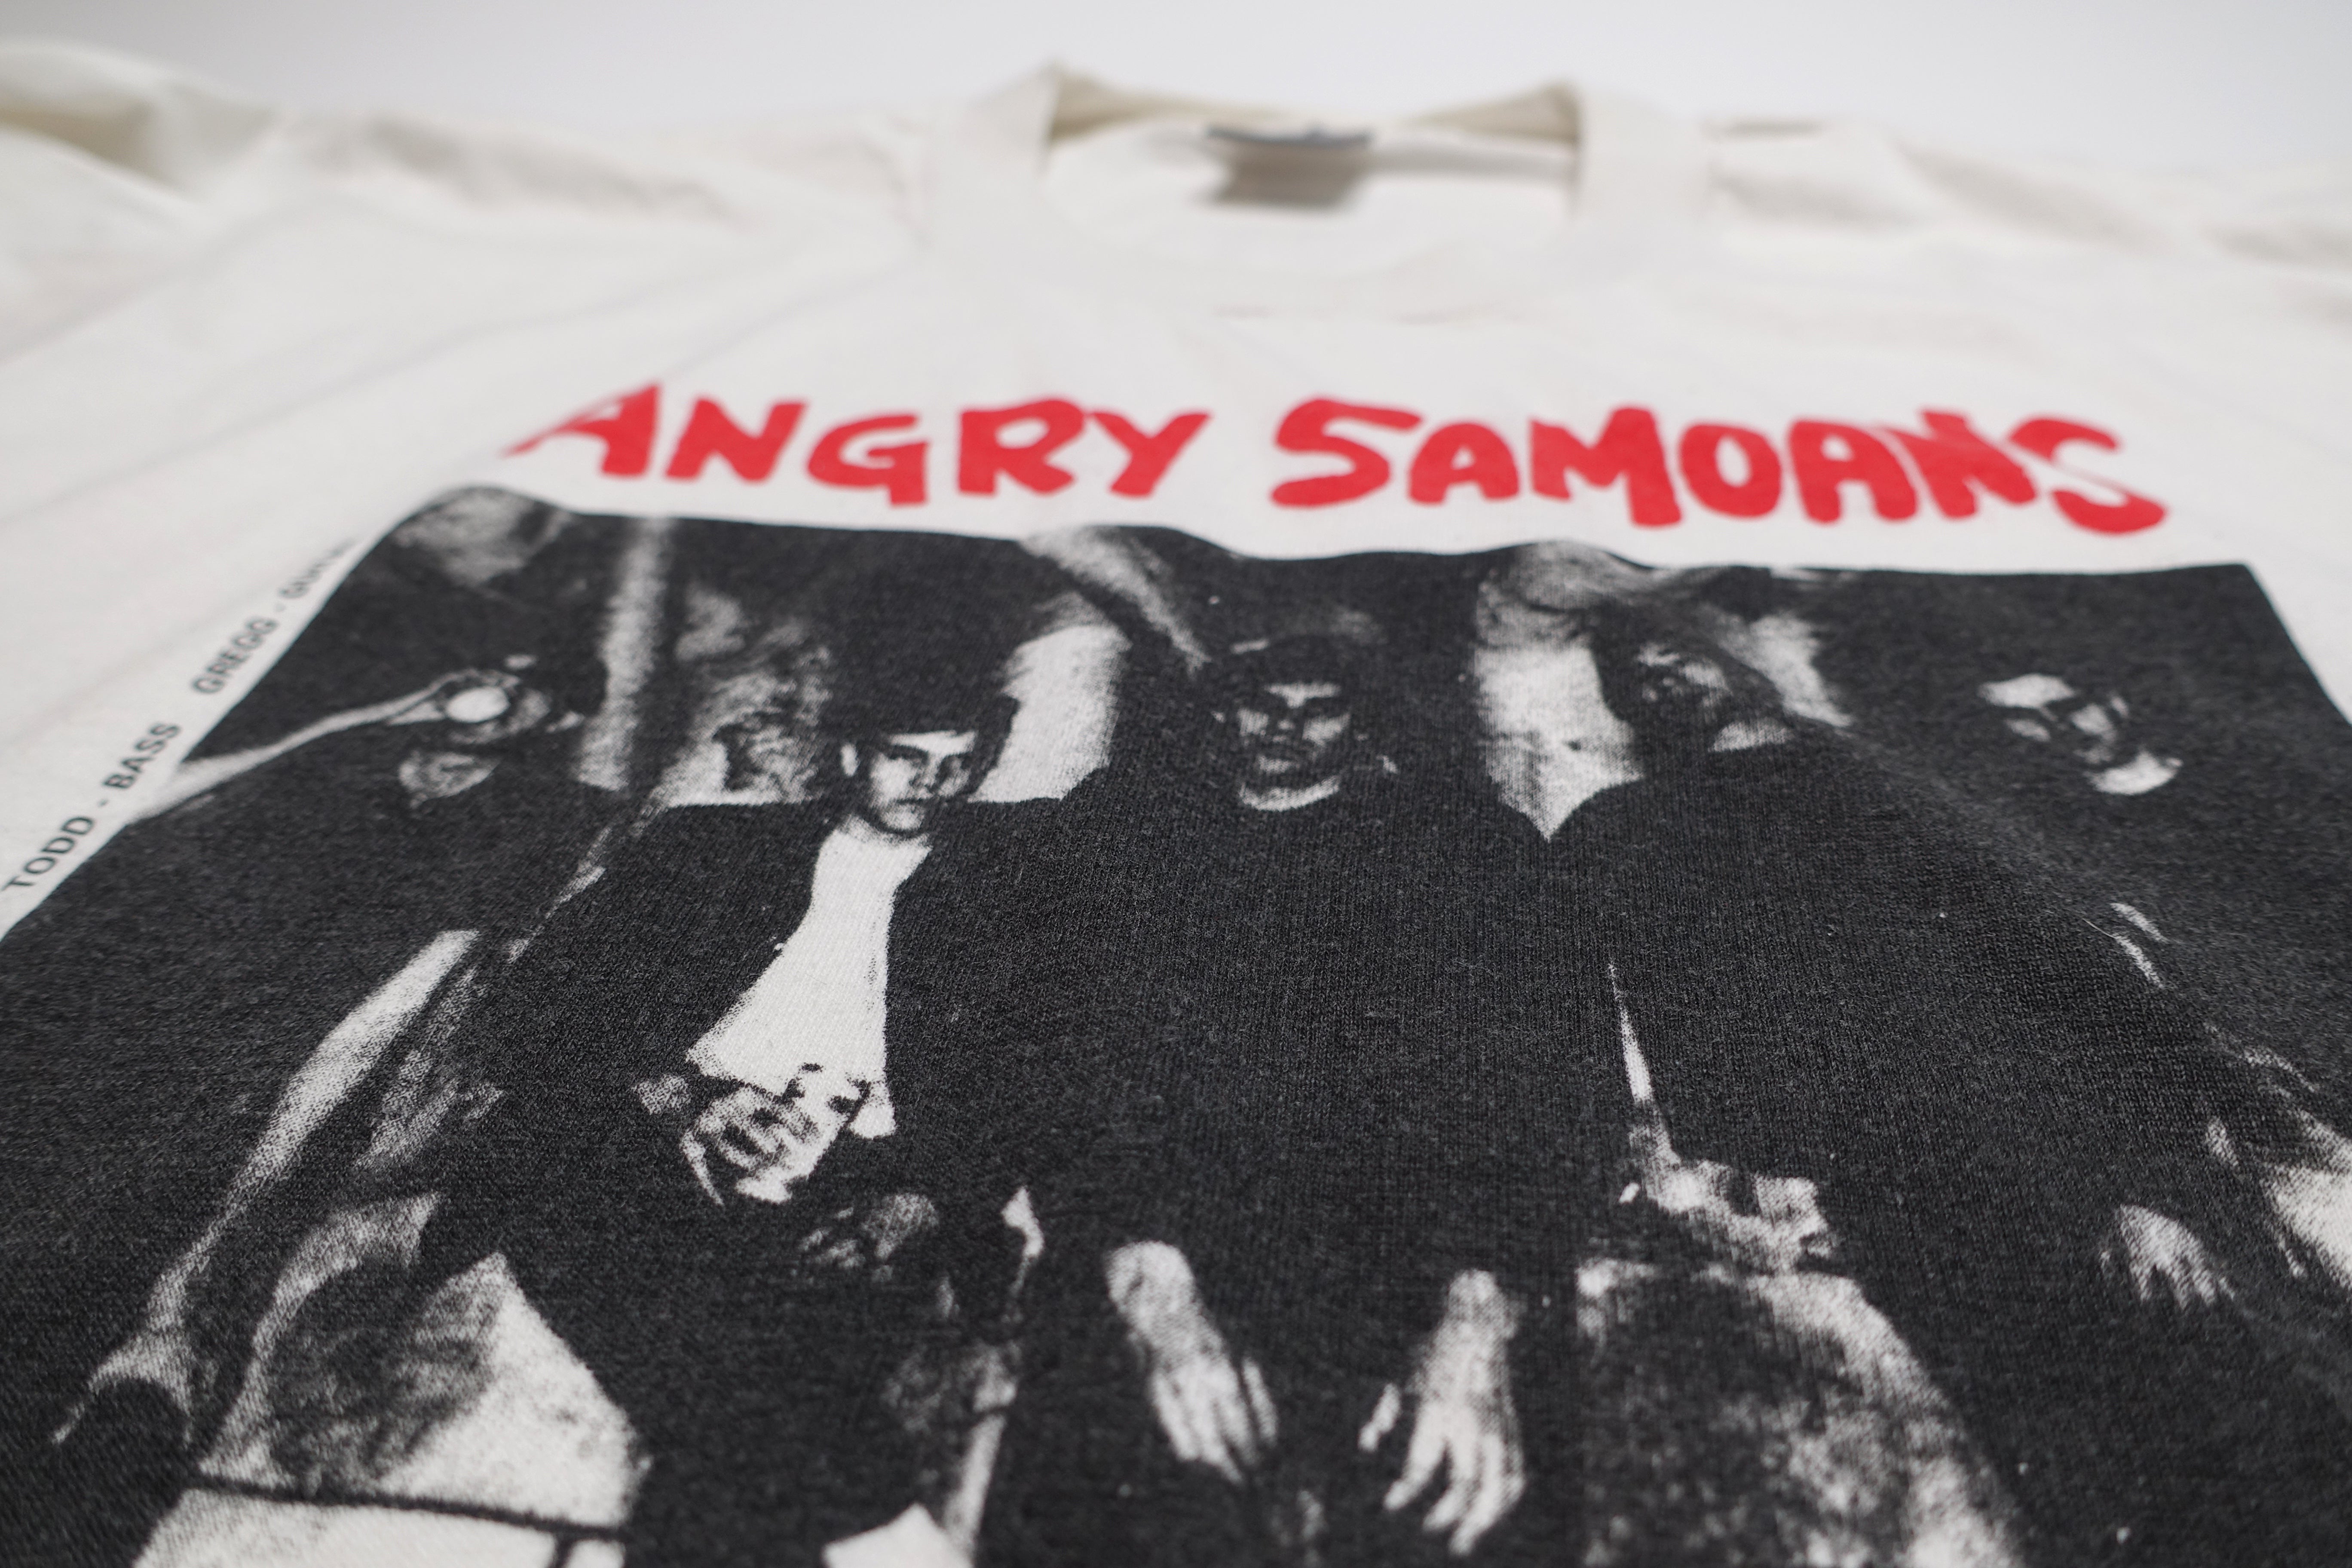 Angry Samoans – Band Portrait 90's Tour Shirt Size Large